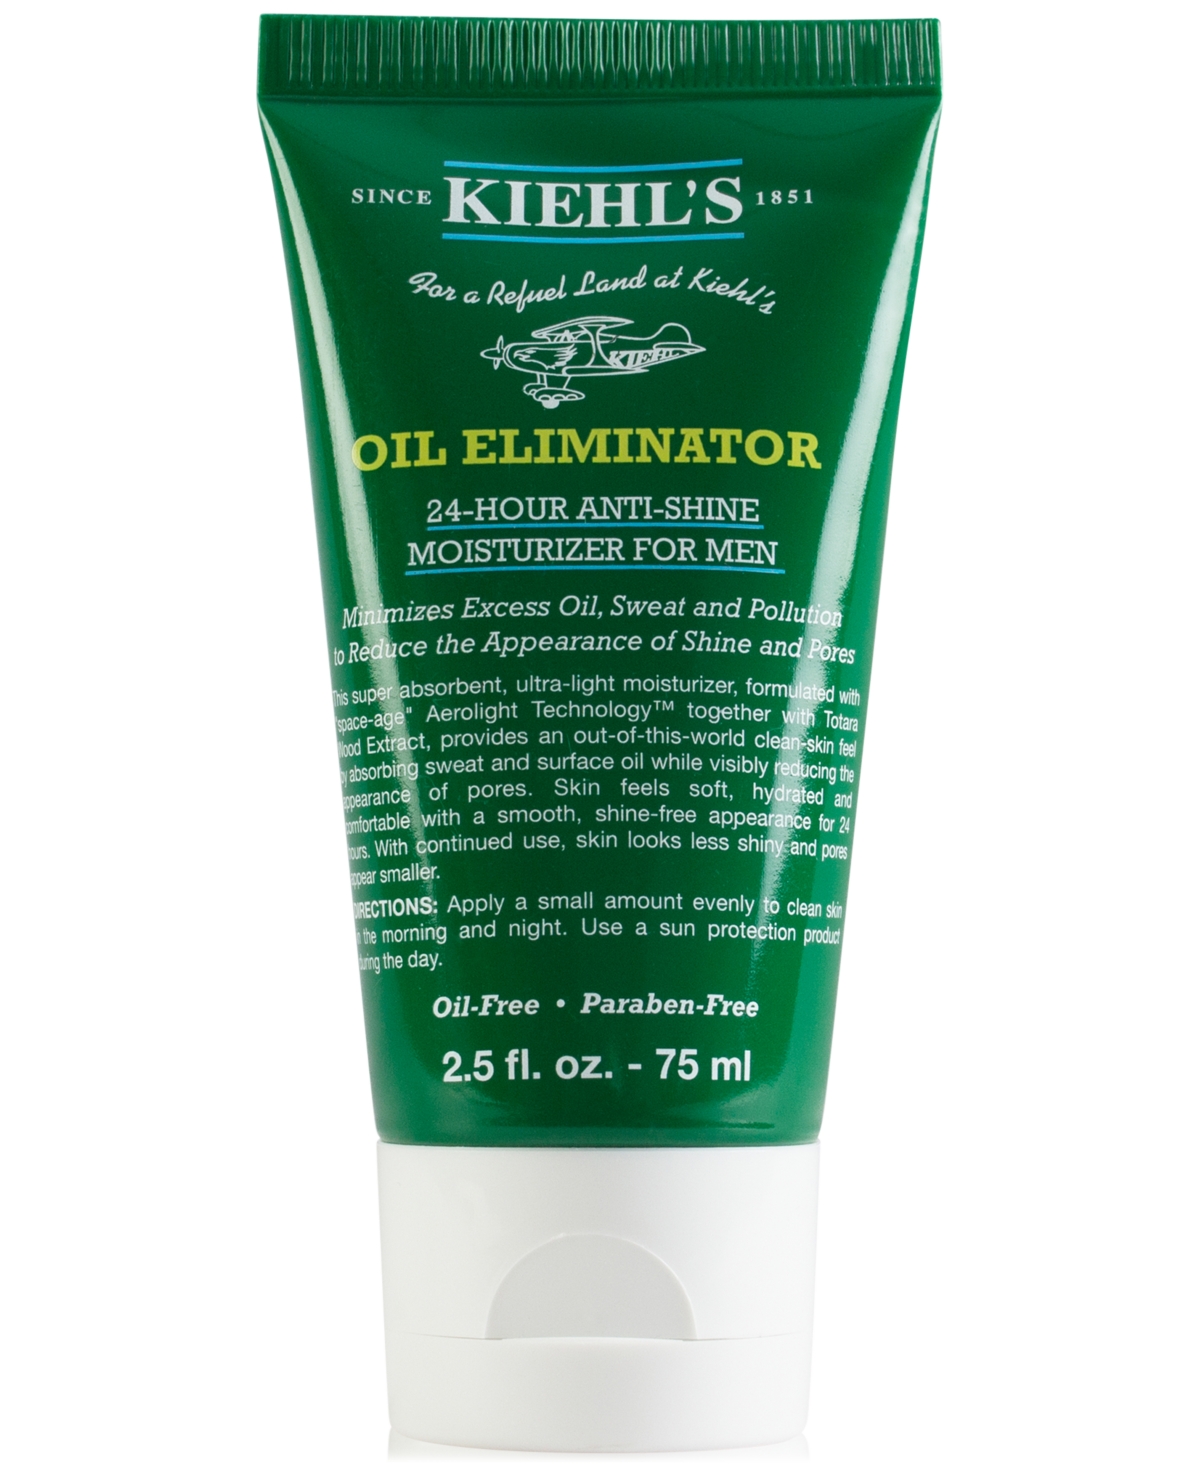 Kiehl's Since 1851 Oil Eliminator 24-Hour Anti-Shine Moisturizer For Men, 2.5-oz.